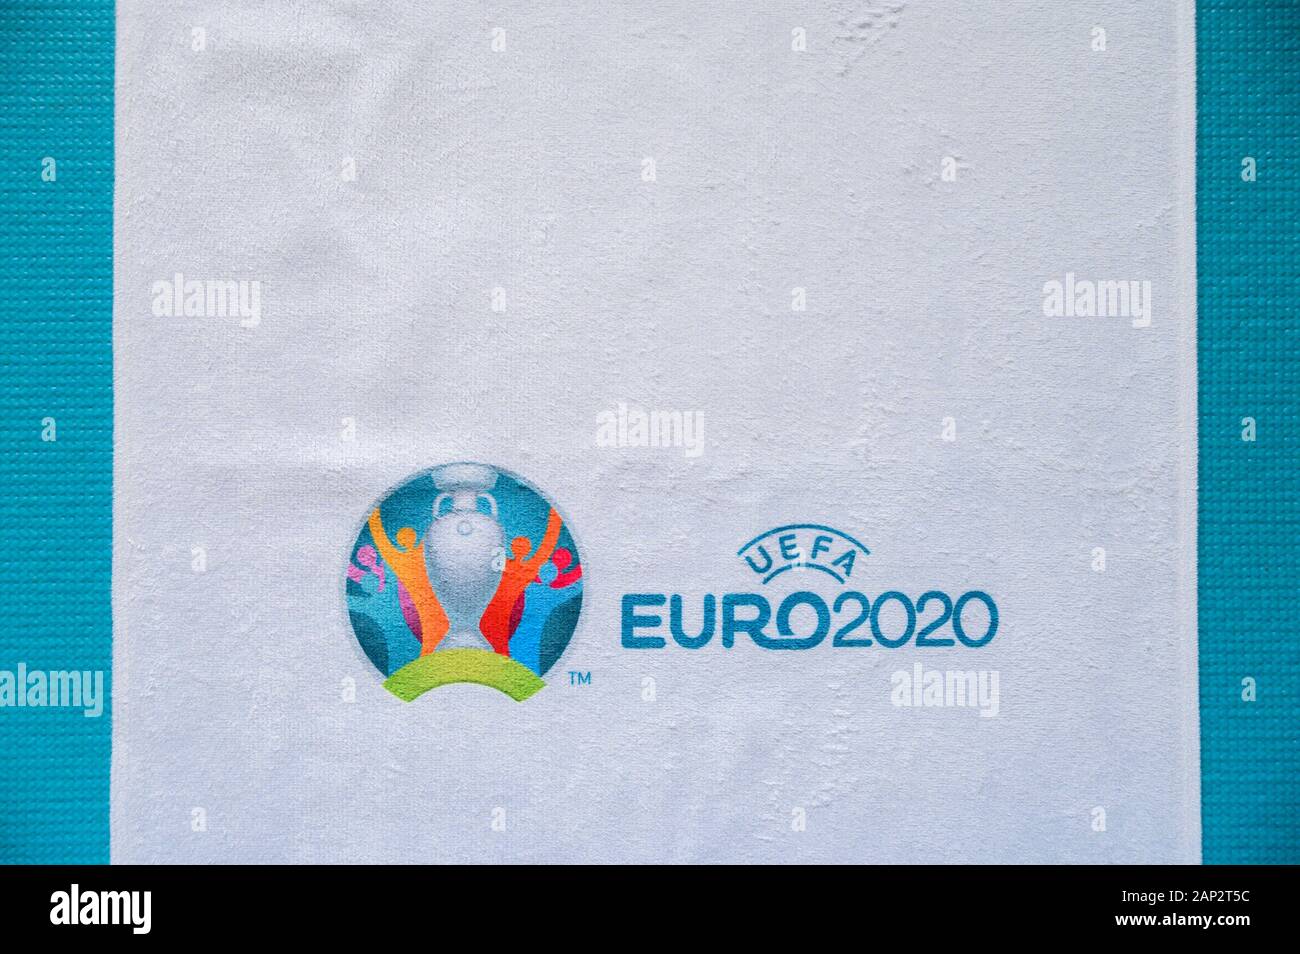 PARIS, FRANCE, JANUARY. 20. 2020: Official logo of Euro 2020 football ...